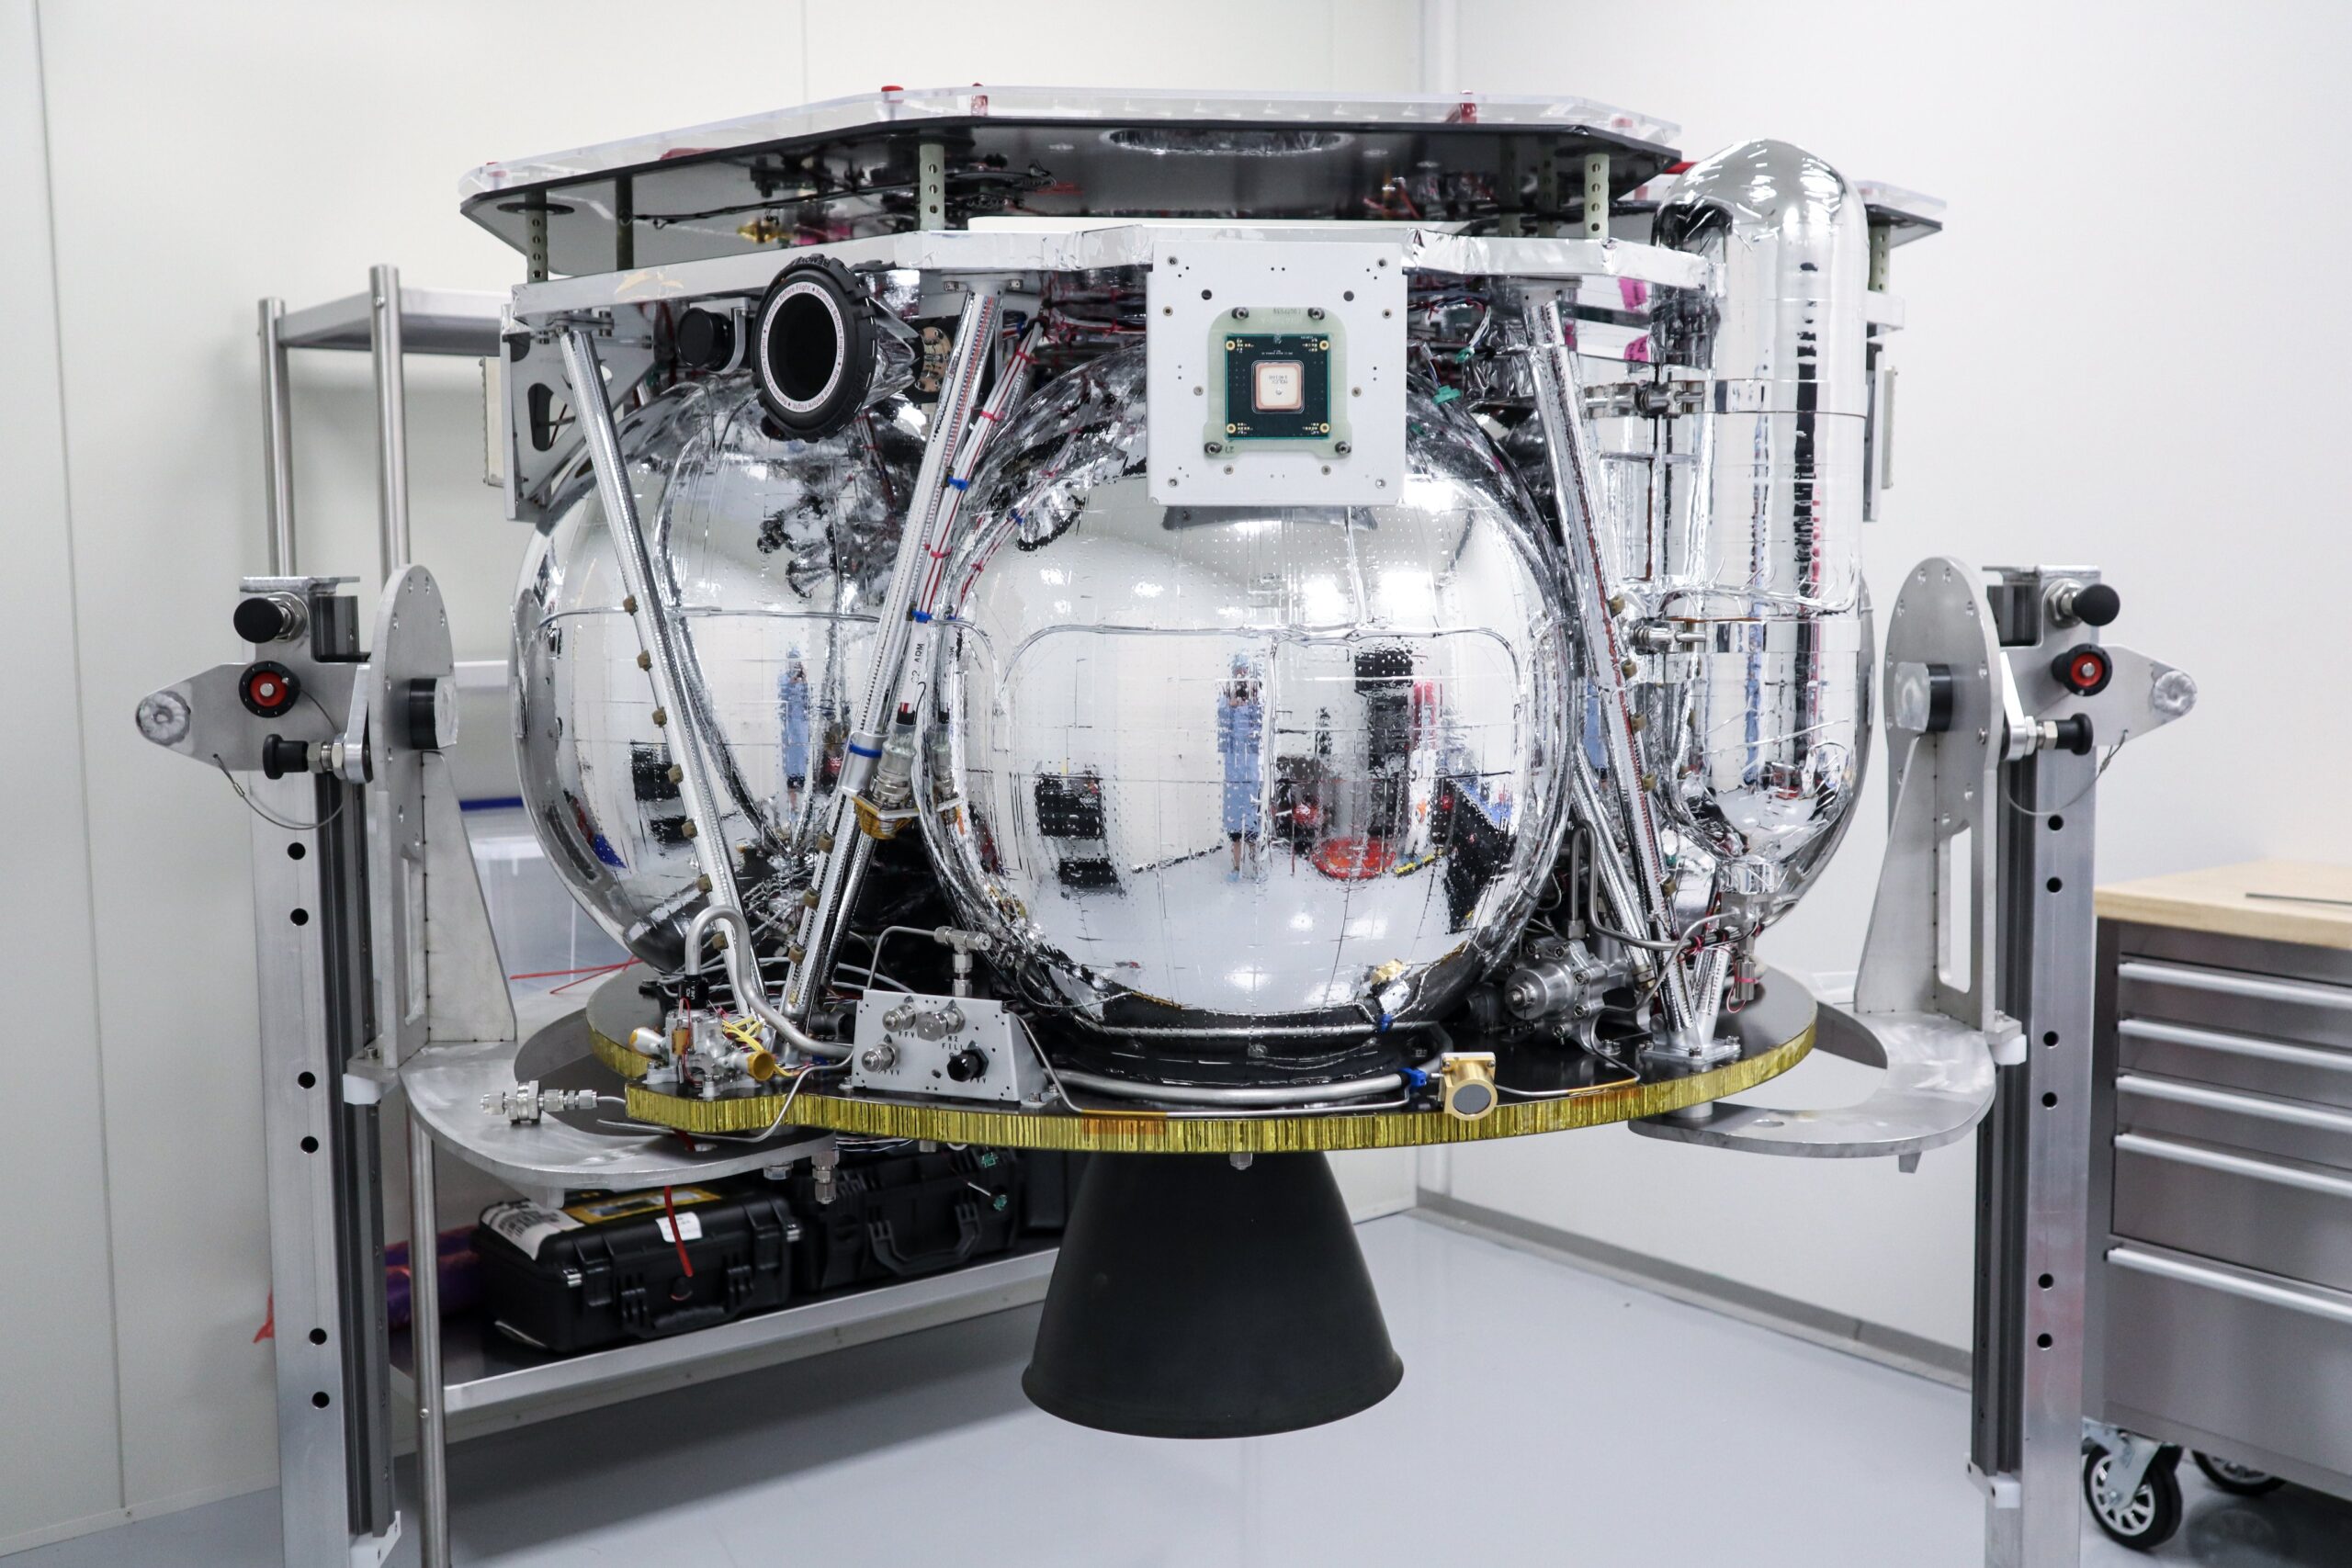 Rocket Lab share details of exciting lunar spacecraft